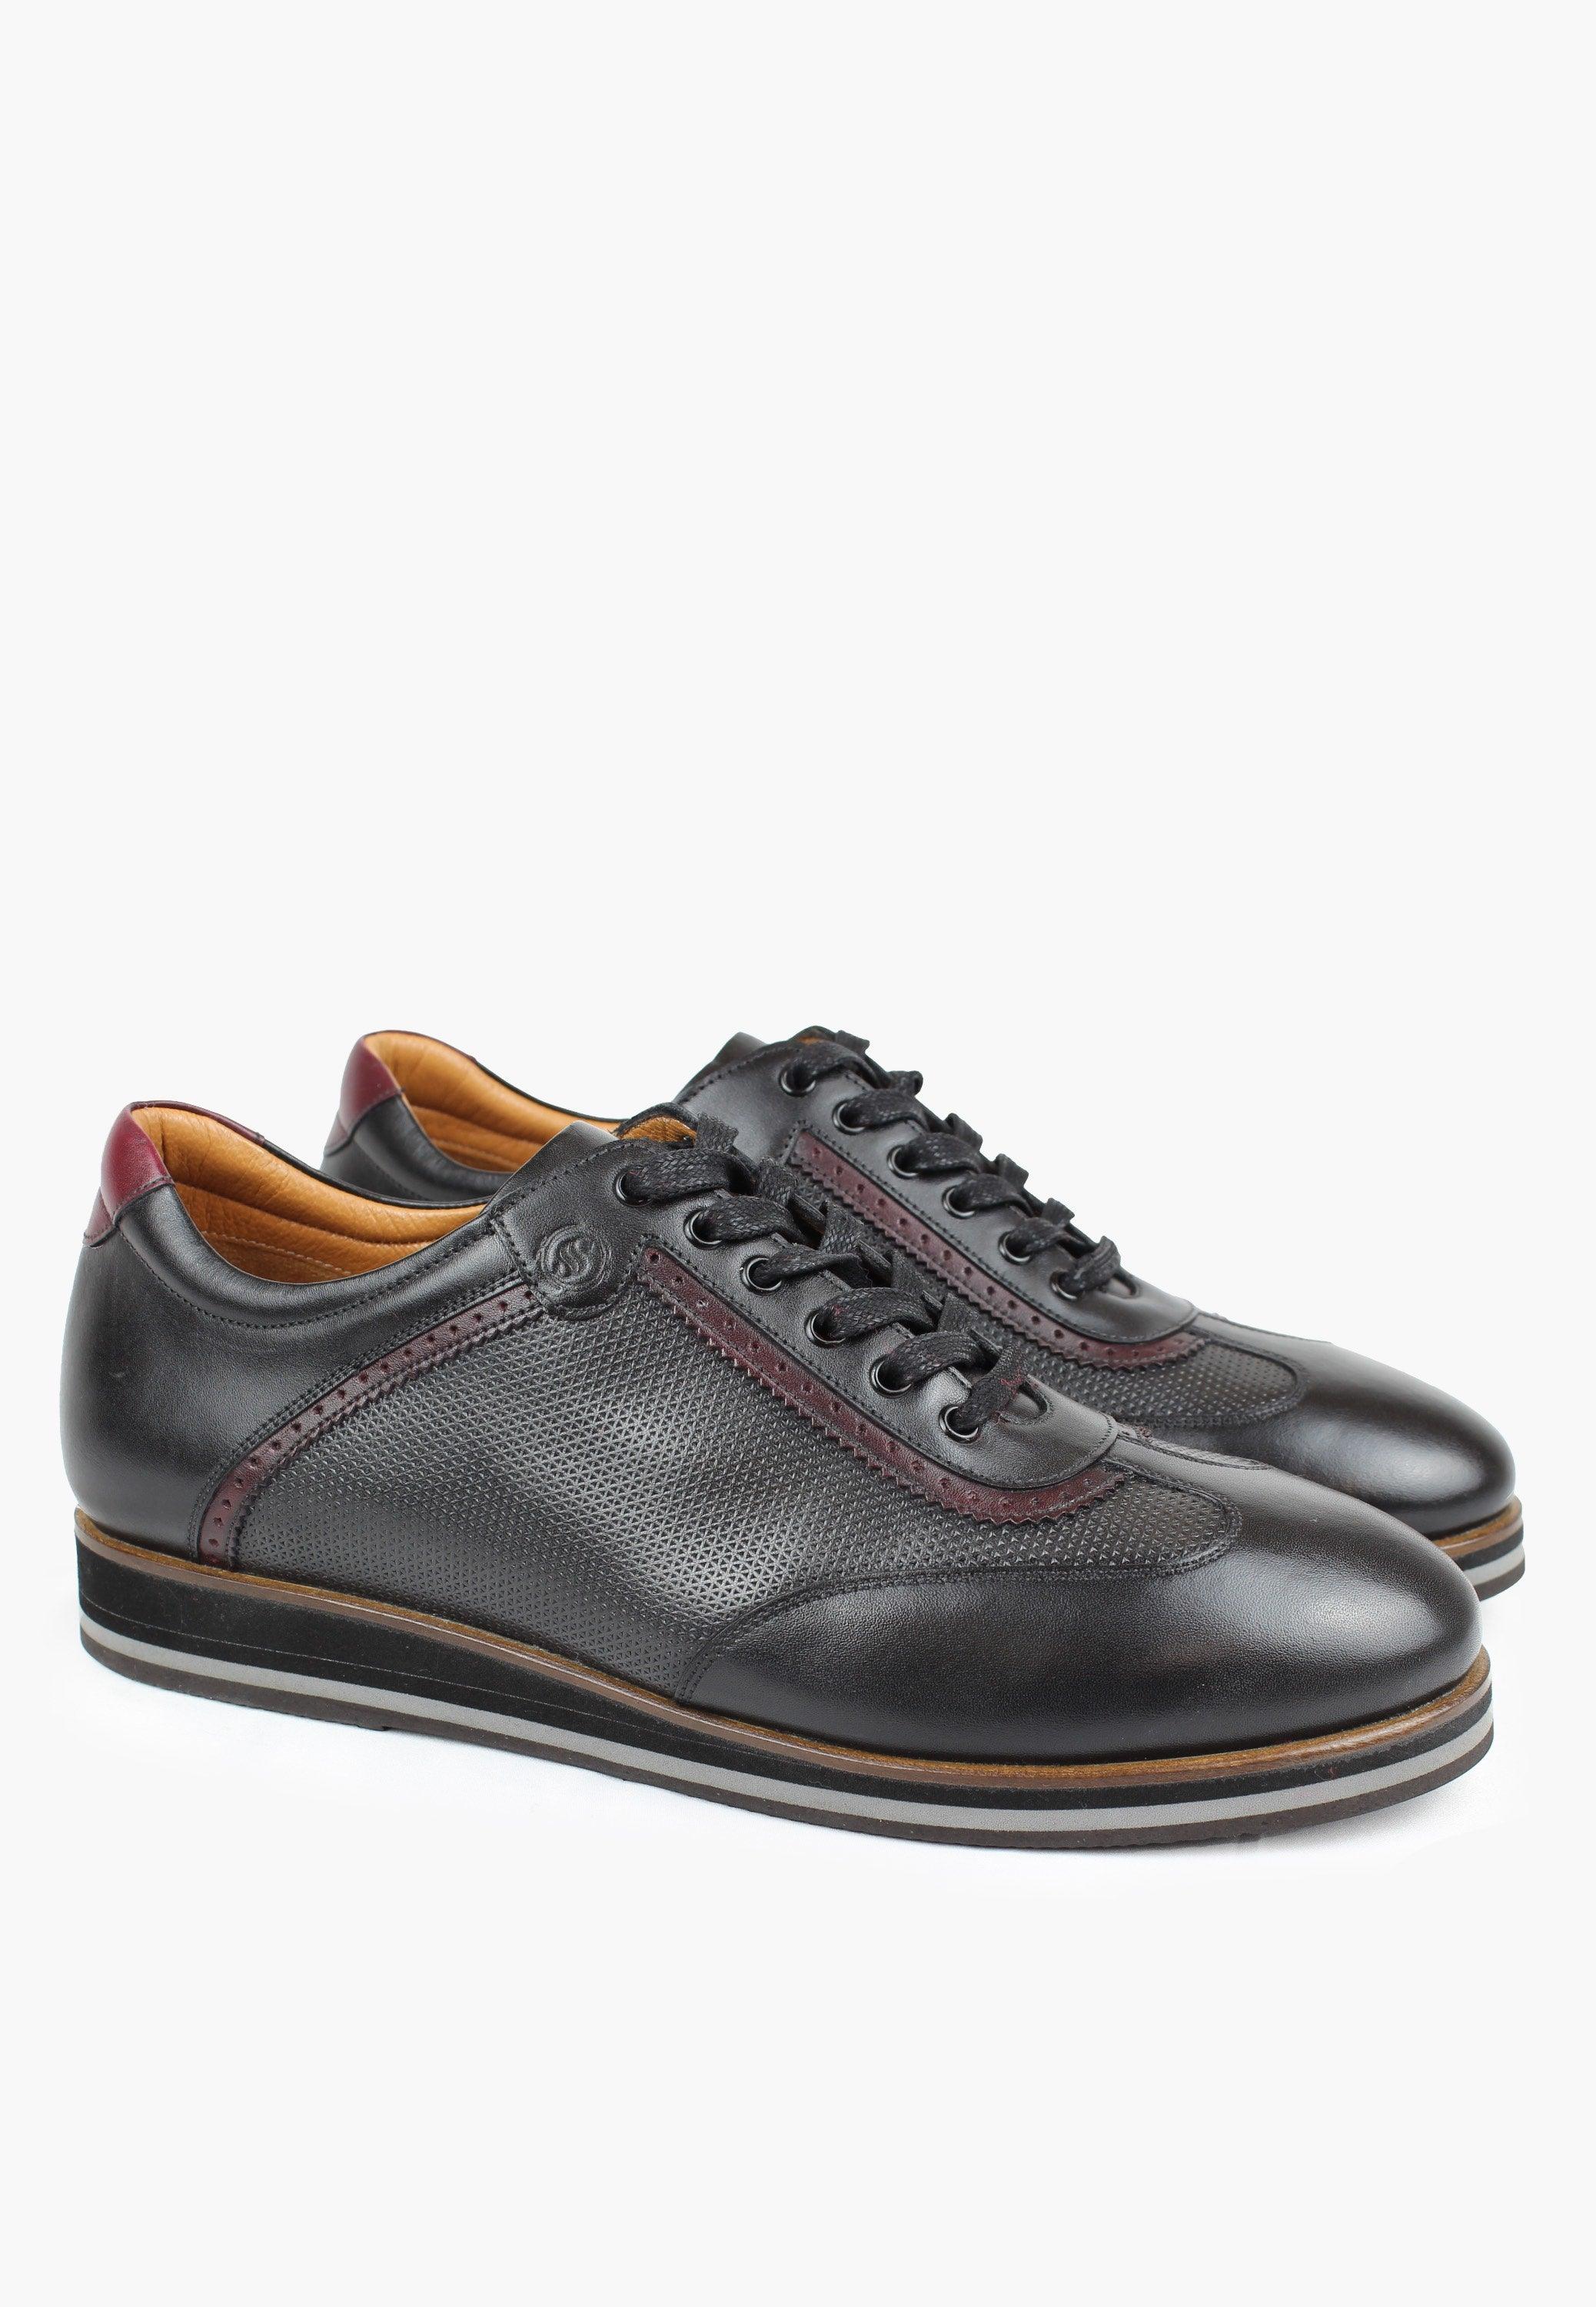 Princeton Black Grey - SEPOL Shoes